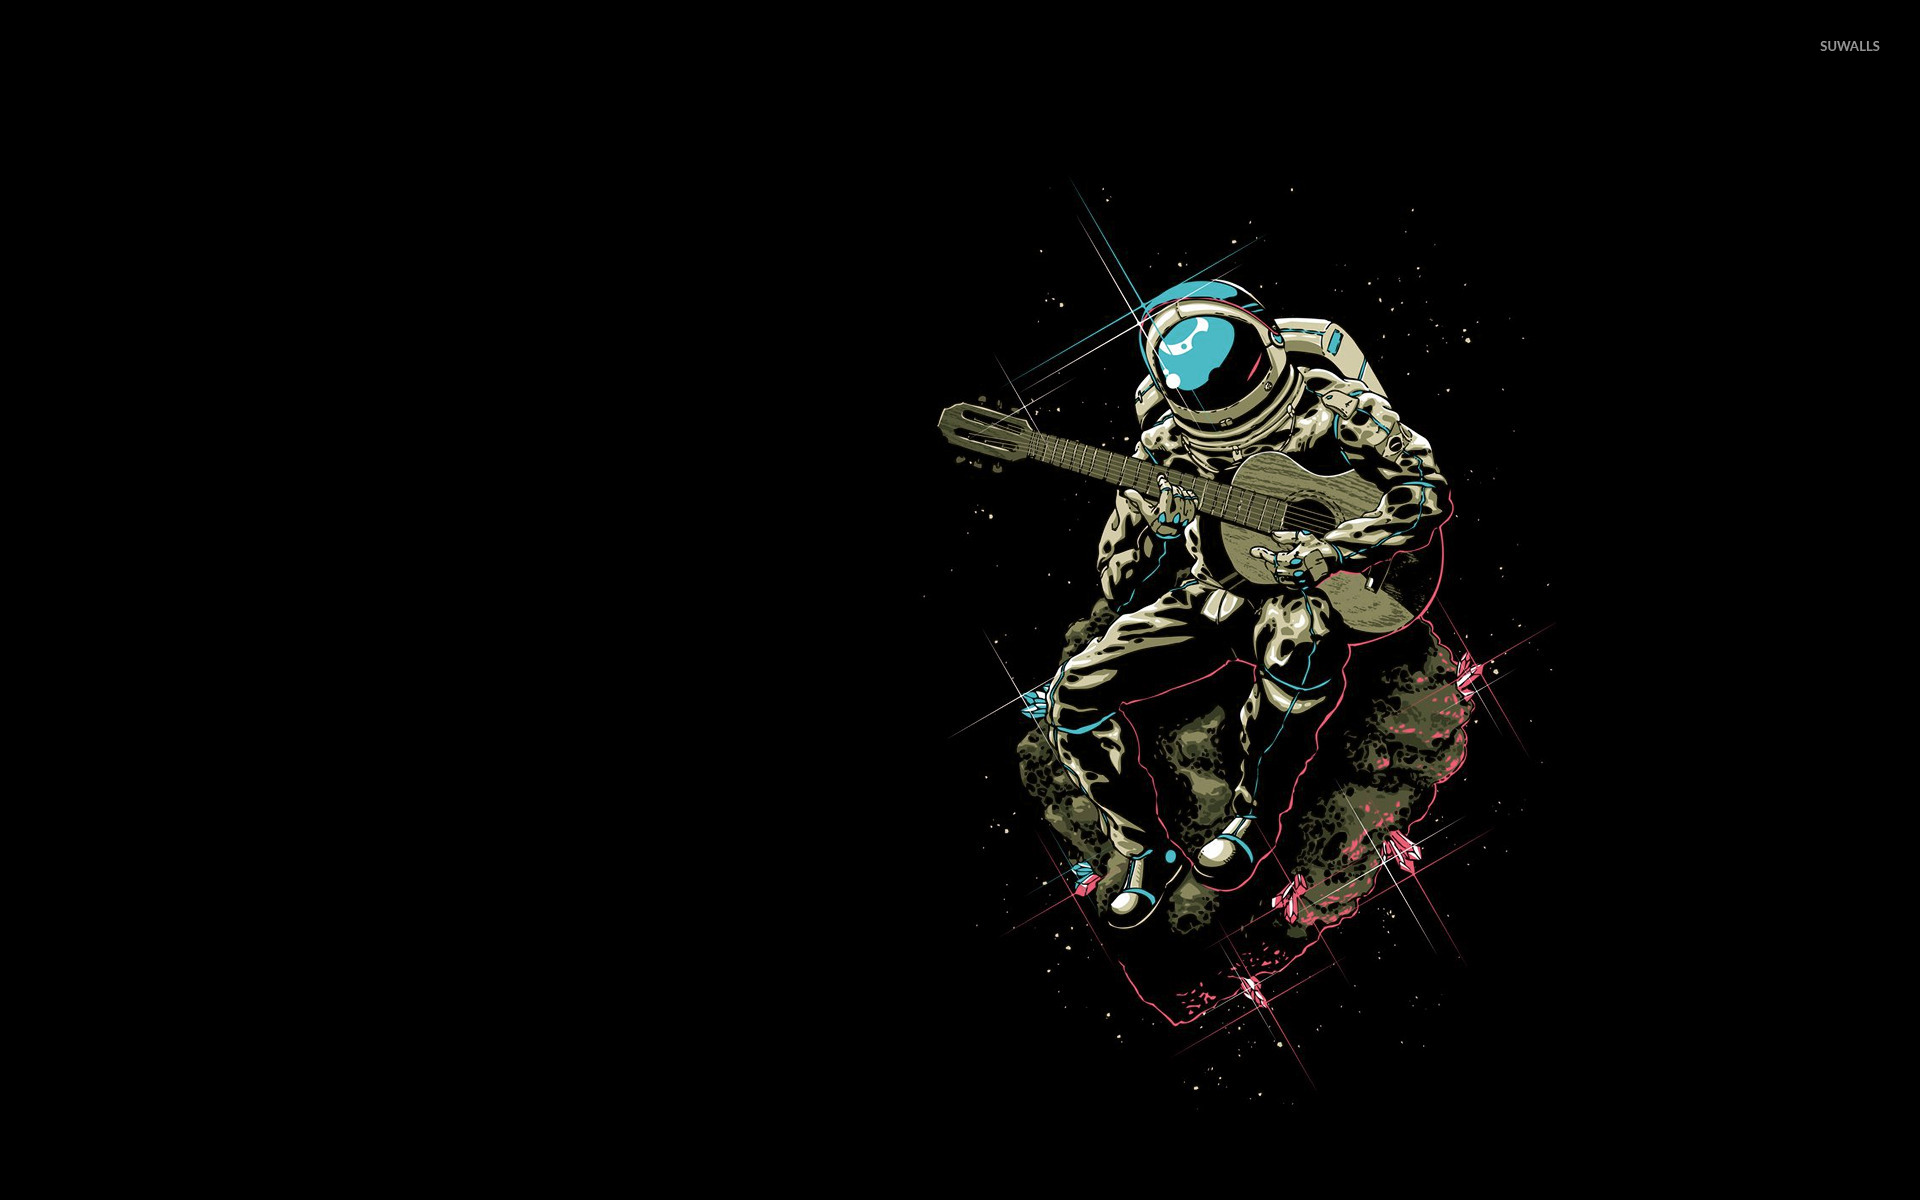 Free download Guitarist astronaut wallpaper Funny wallpaper 16047 [1920x1200] for your Desktop, Mobile & Tablet. Explore Astronaut Wallpaper. NASA iPhone Wallpaper, Astronauts in Space Wallpaper, Cool Astronaut Wallpaper